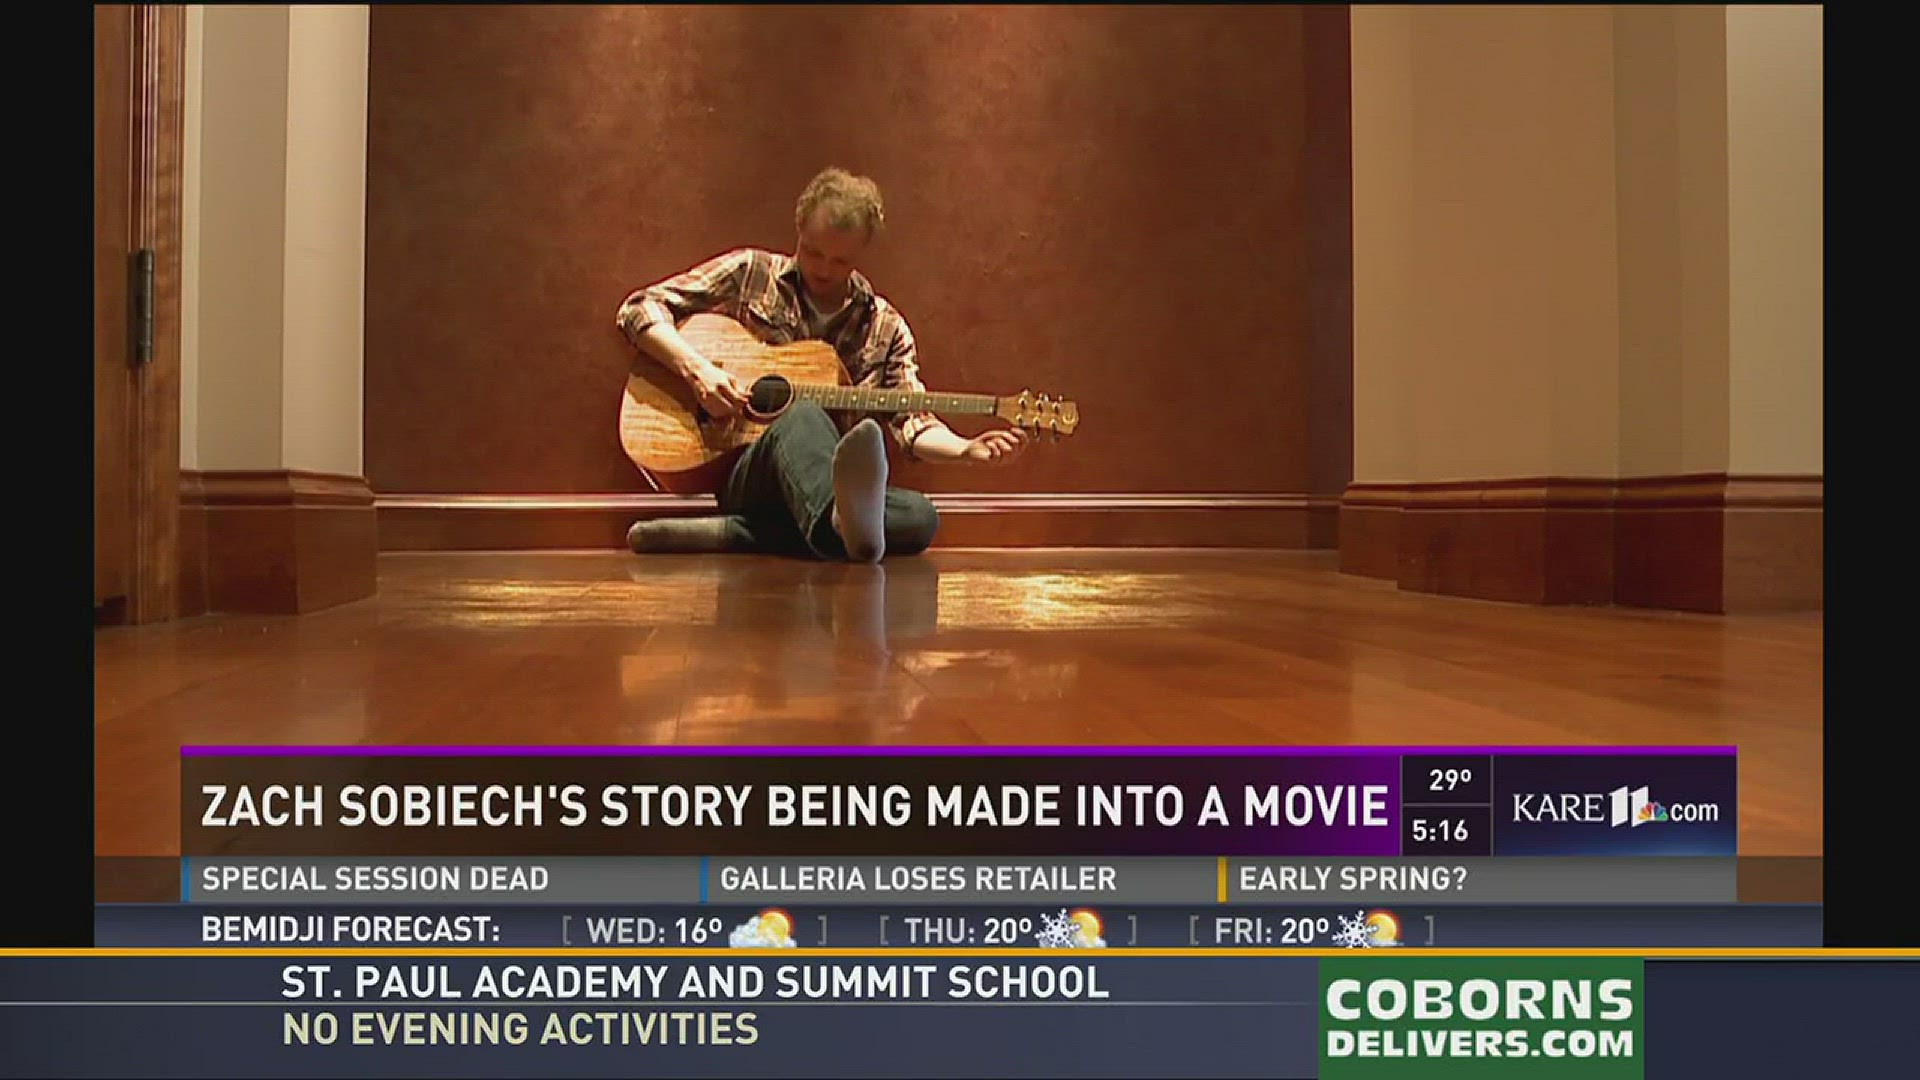 Zach Sobiech's story being made into a movie